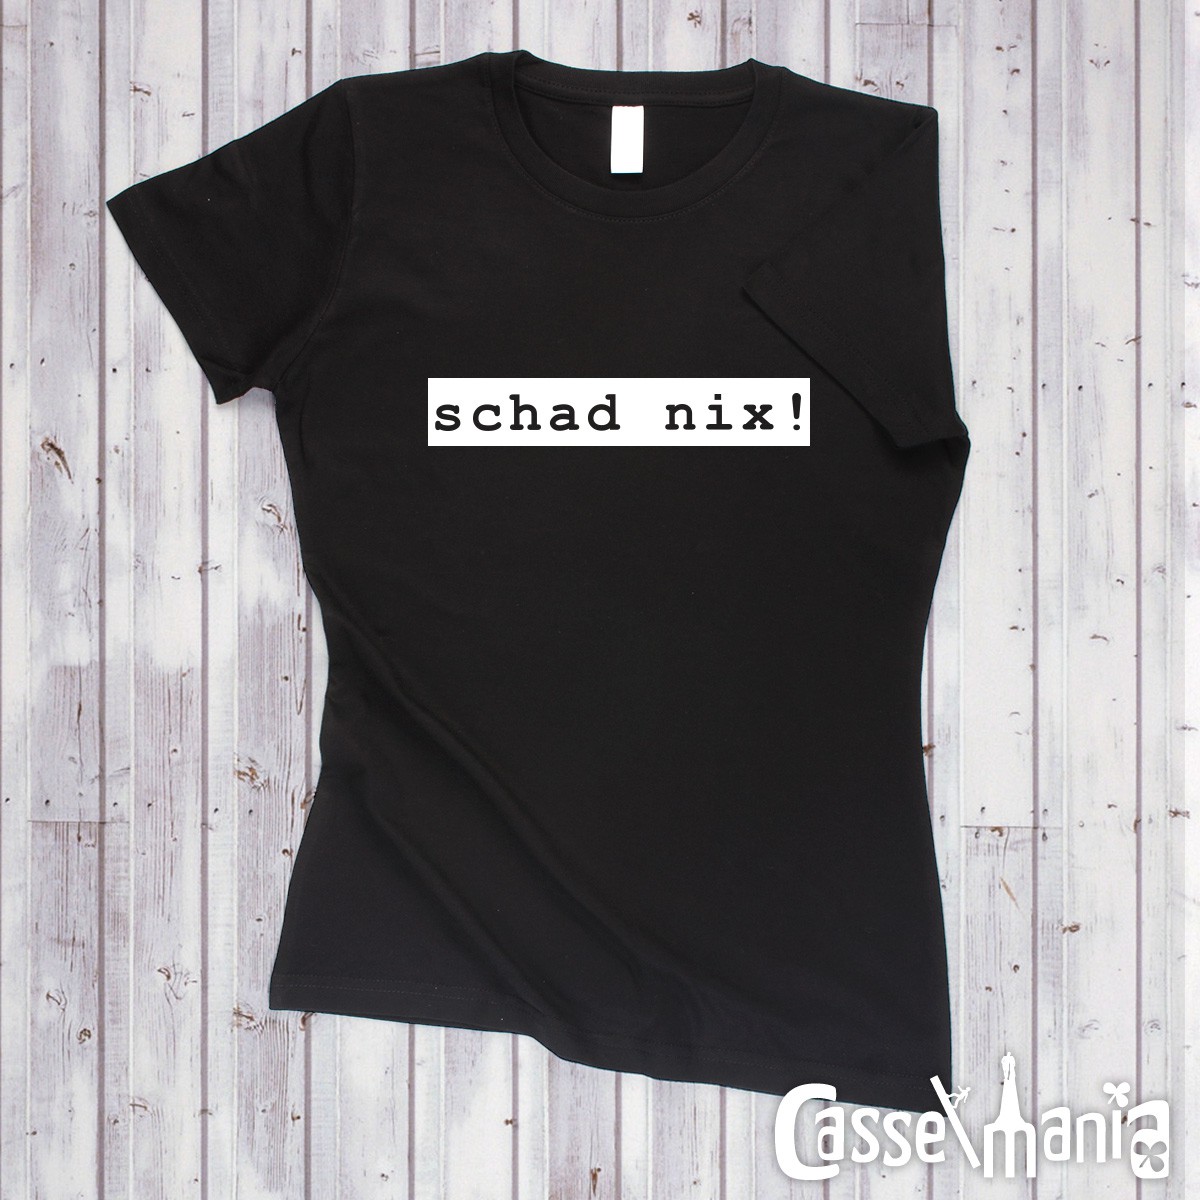 Schad nix! - Women